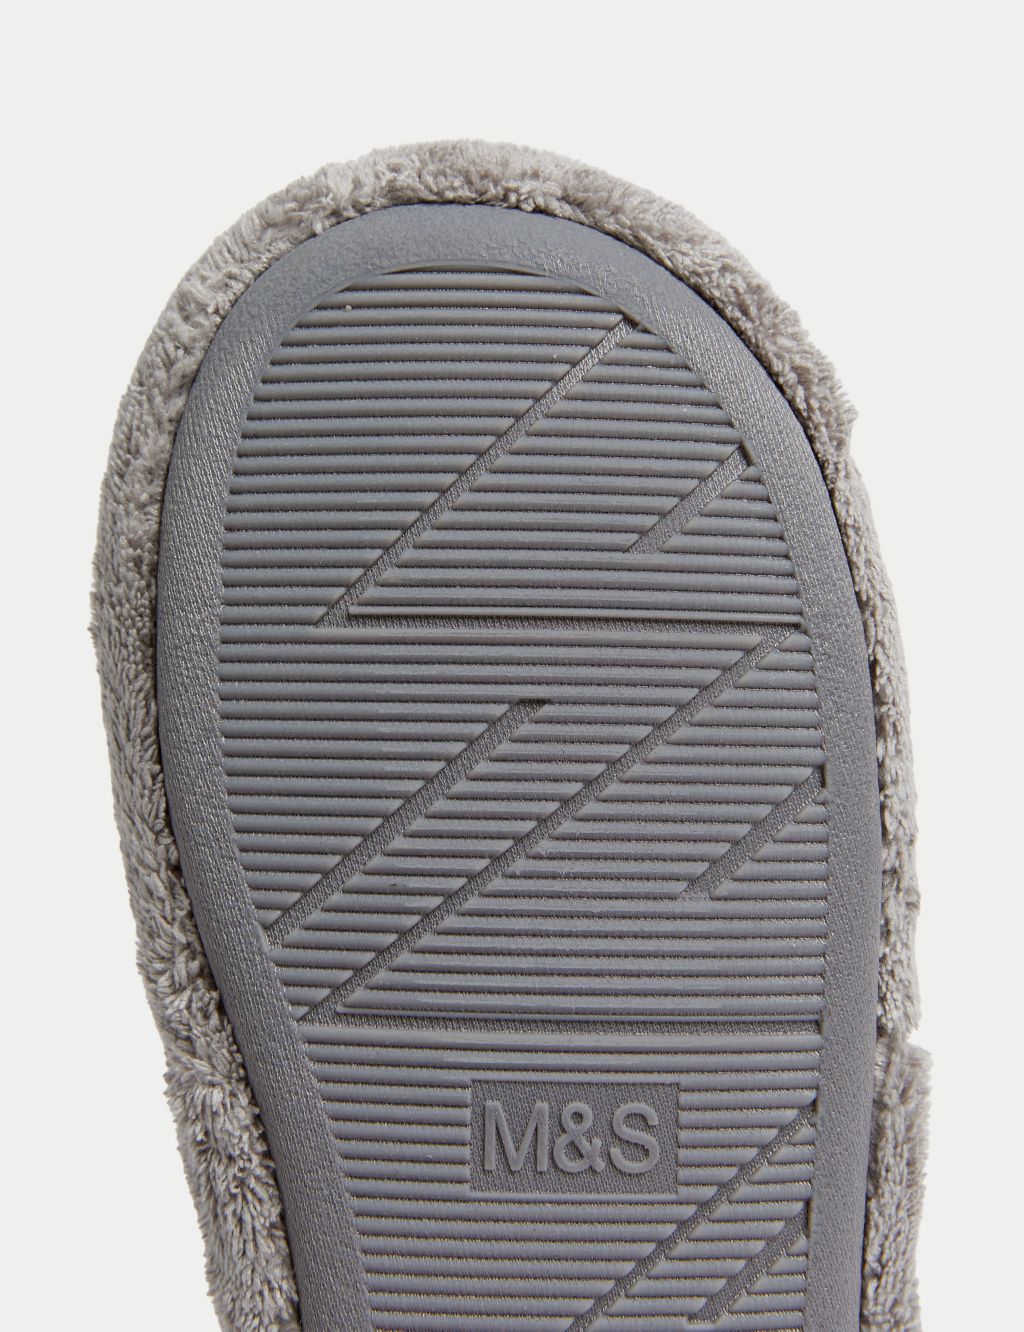 Kids' Slipper Boots (4-7 Yrs) image 4